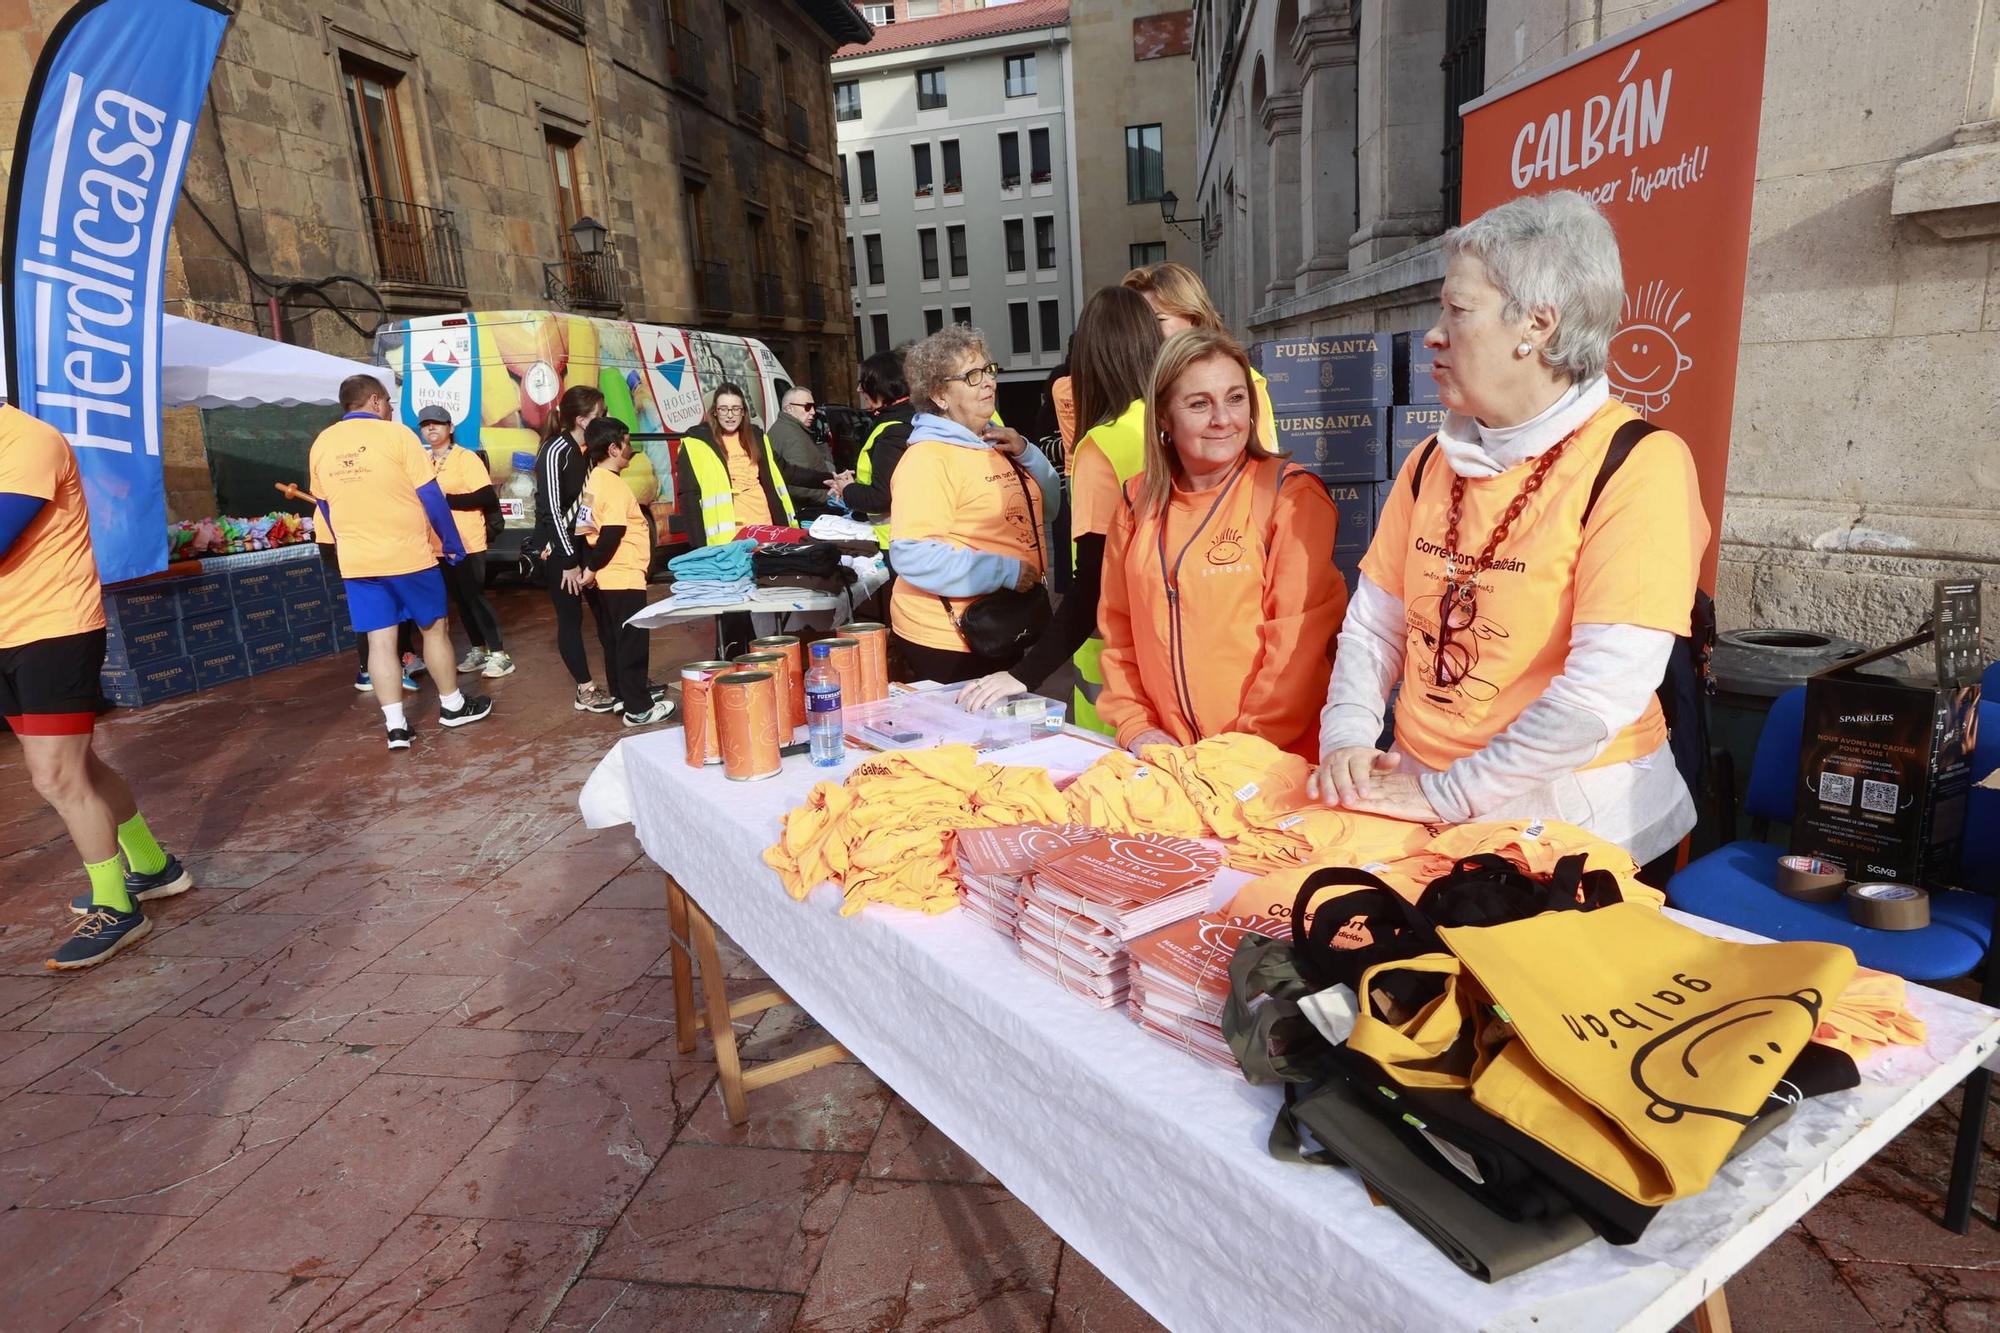 Una ola naranja invade Oviedo para luchar contra el cáncer infantil